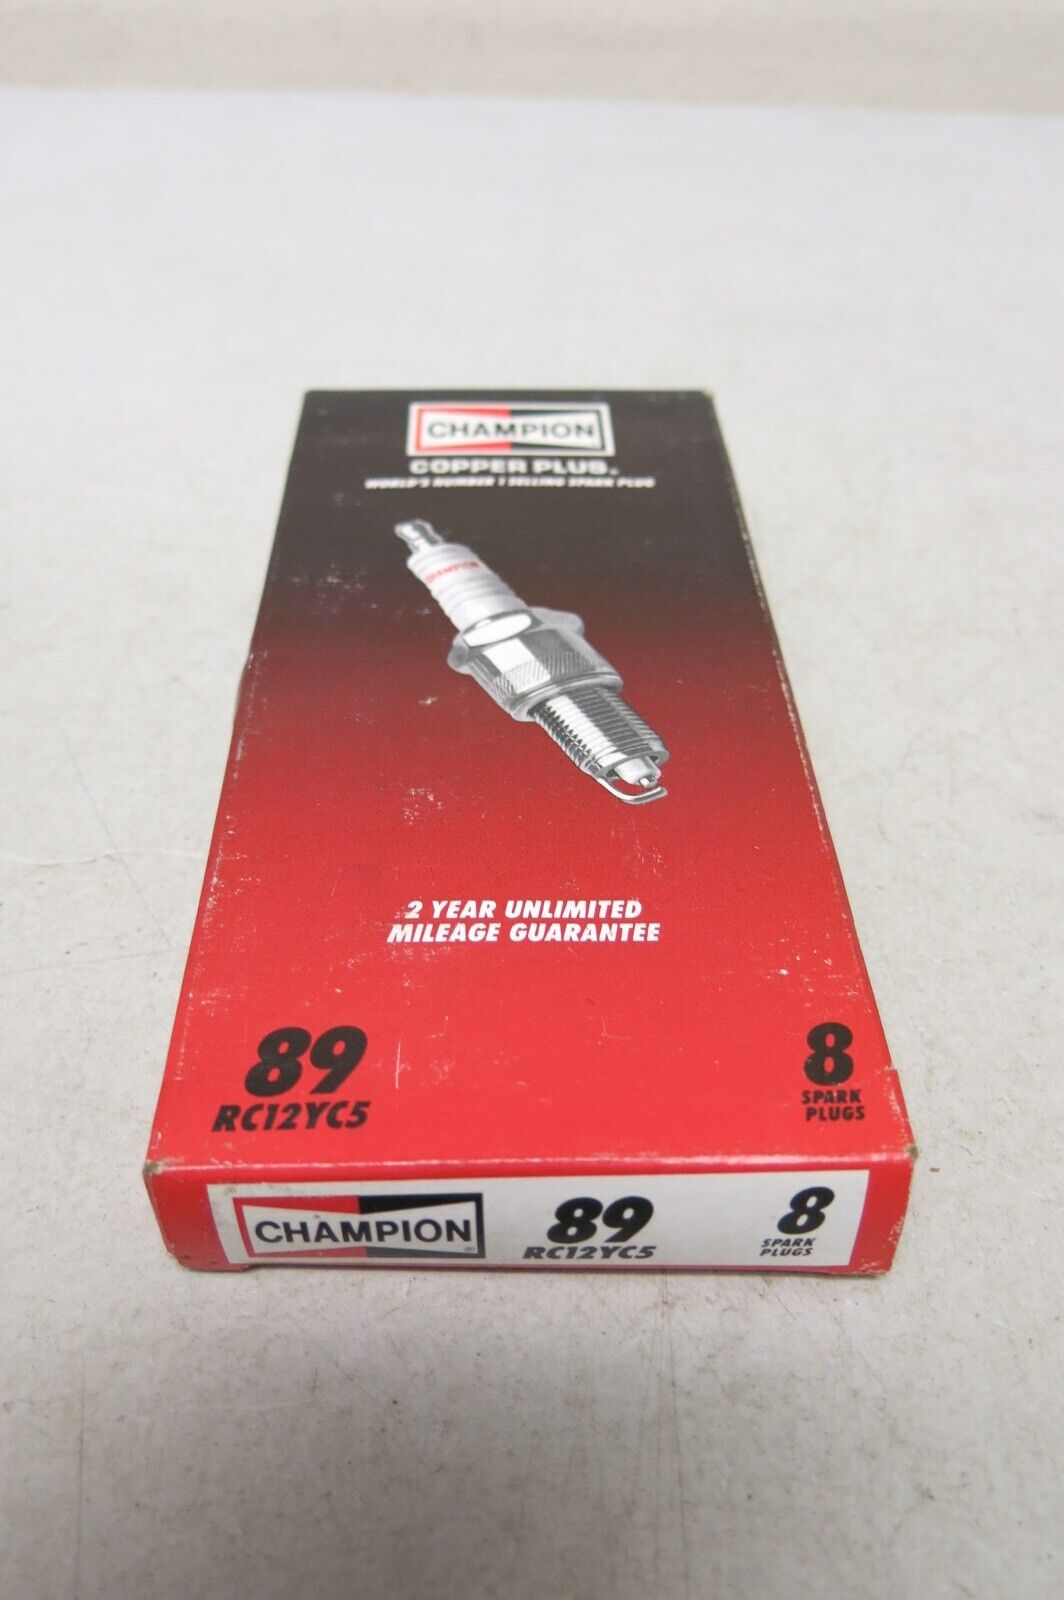 Vintage Champion 89 RC12YC5 Spark Plugs Lot of 8